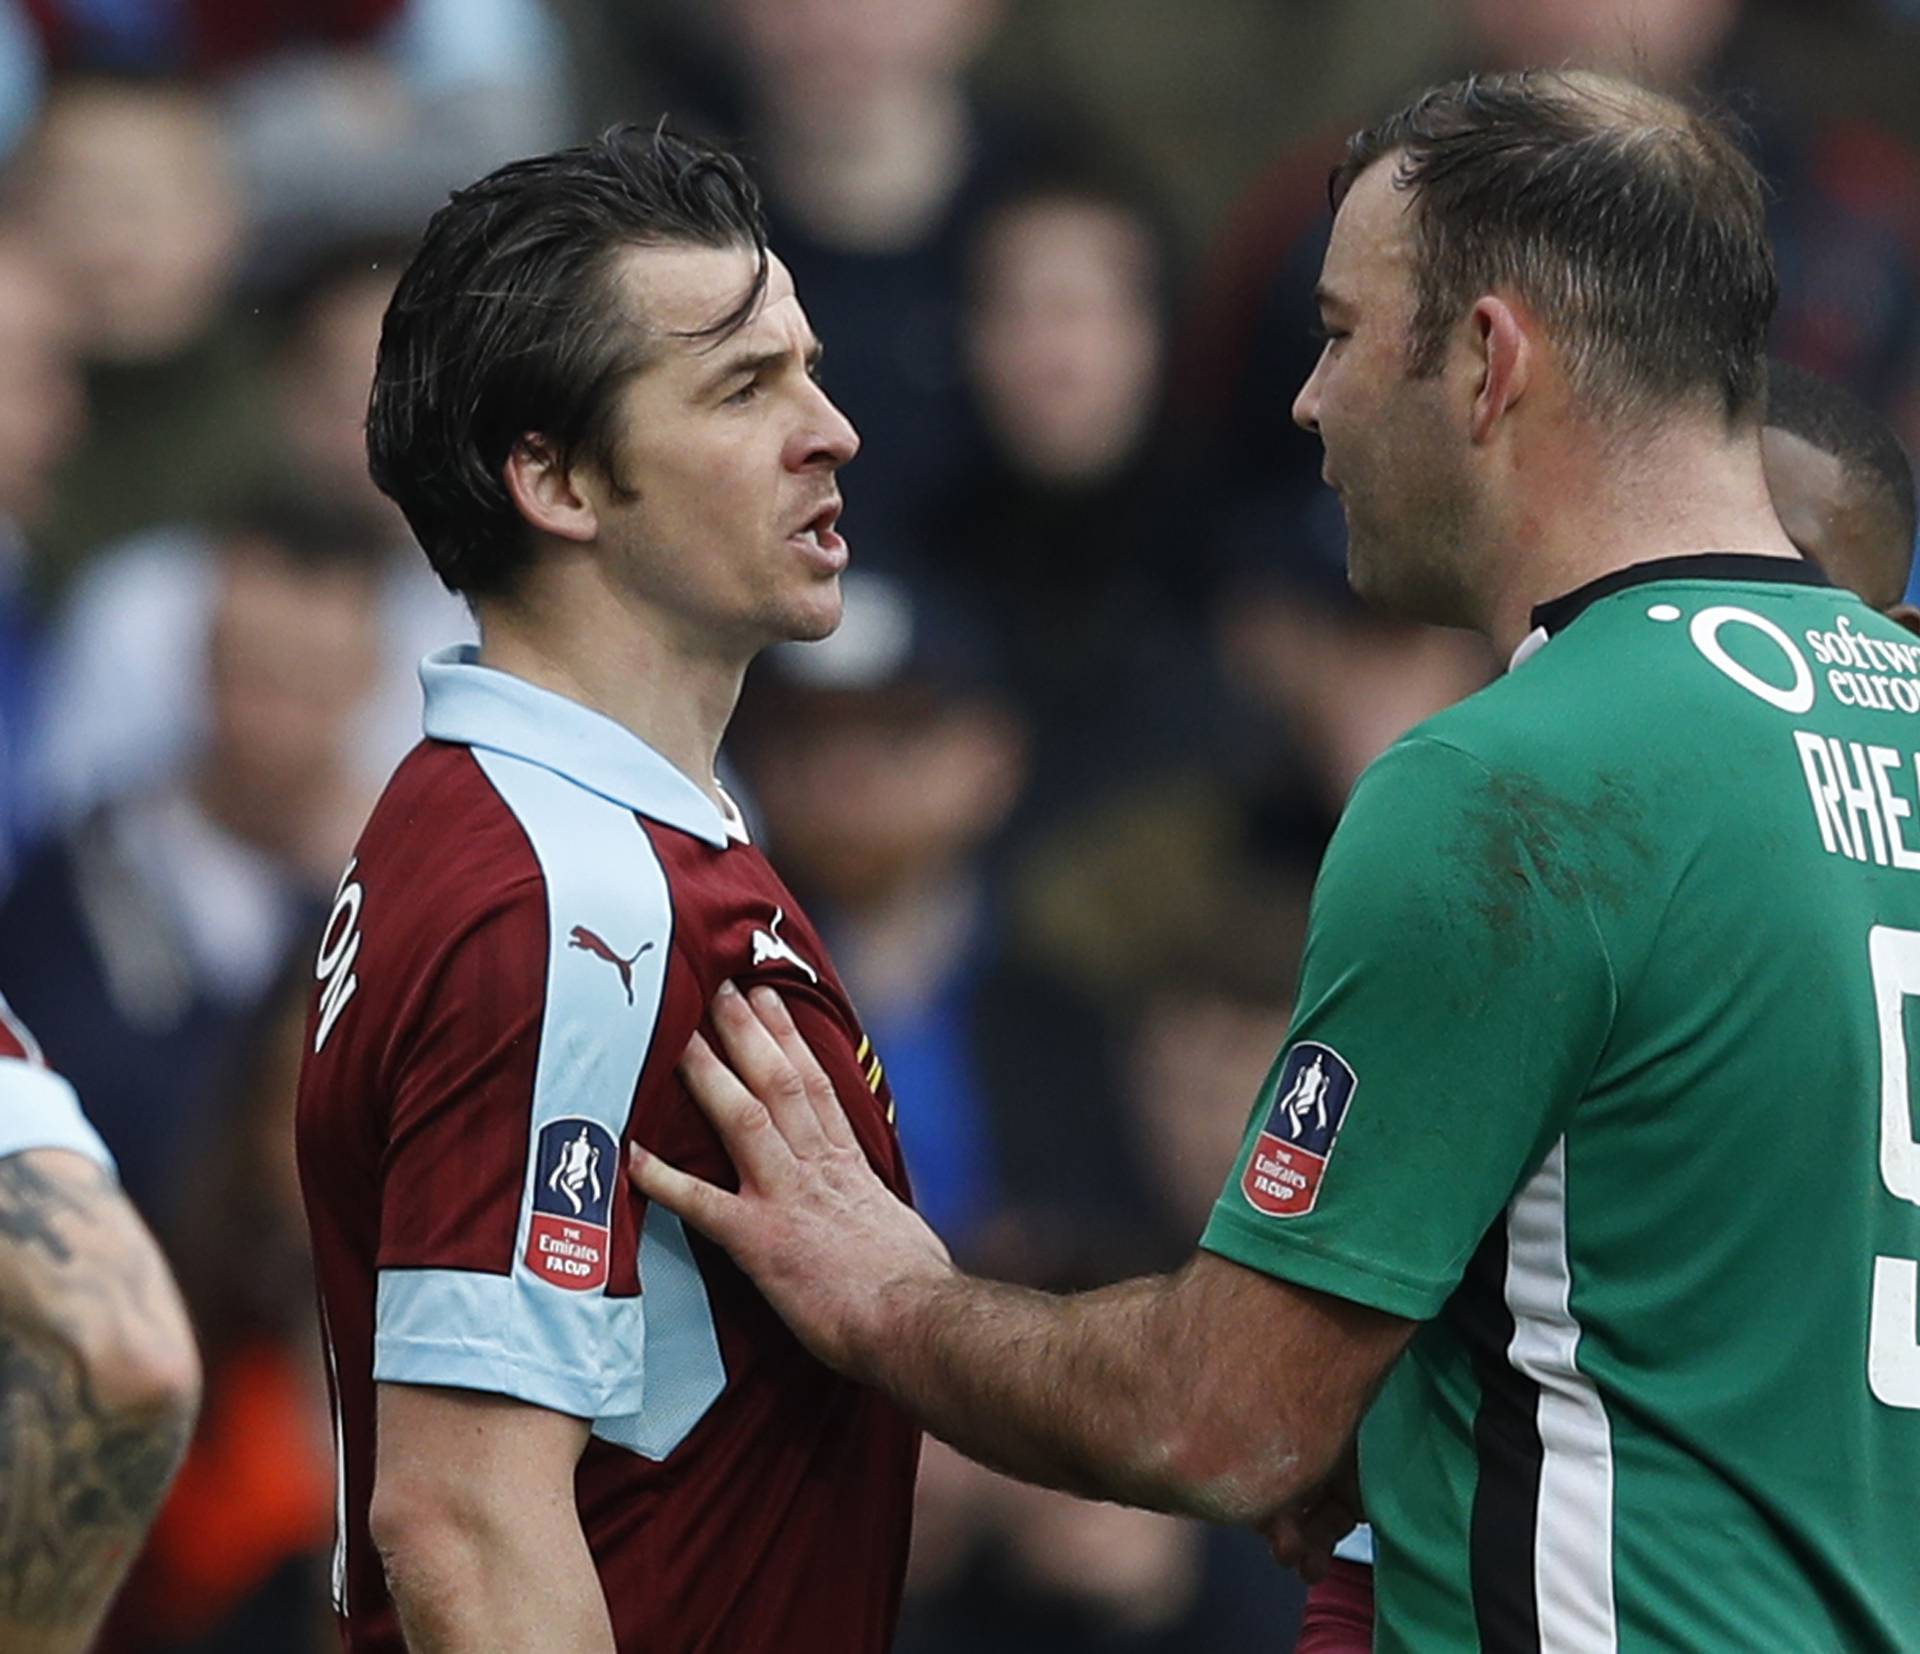 Burnley's Joey Barton clashes with Lincoln's Matthew Rhead